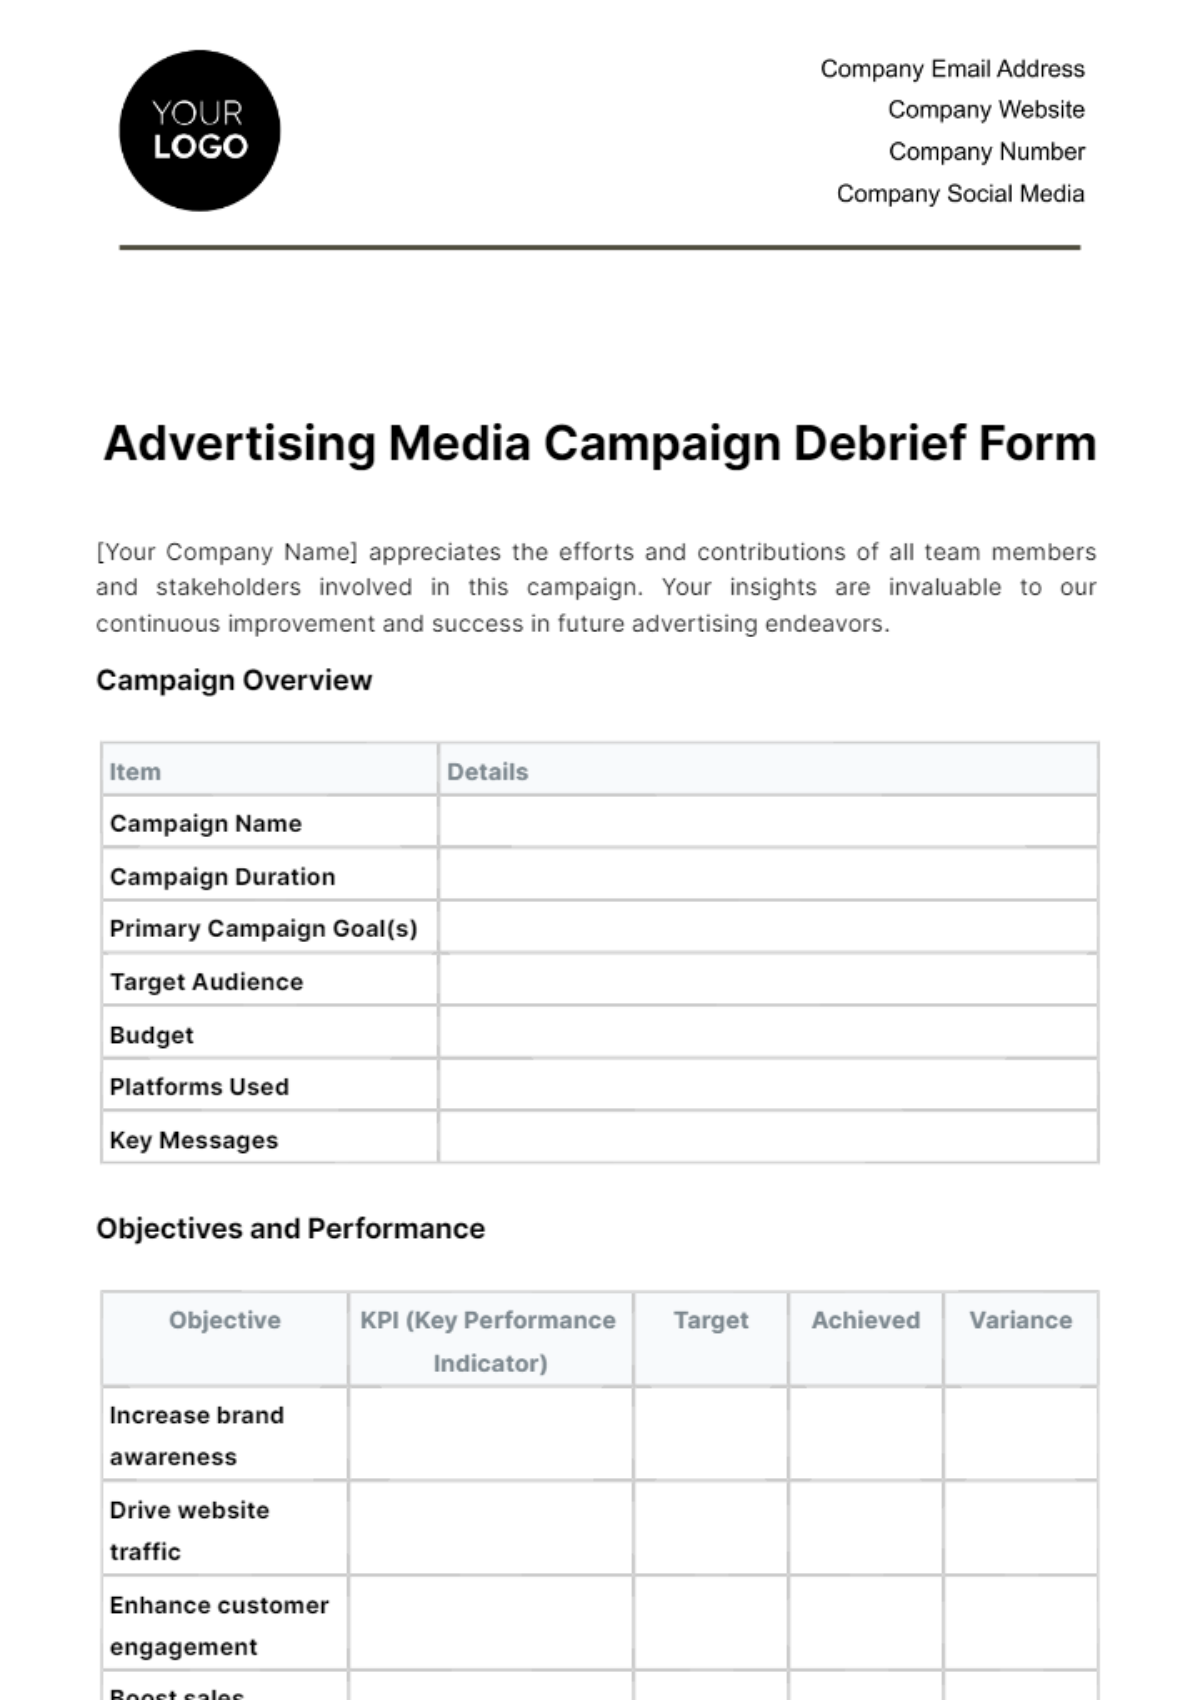 Advertising Media Campaign Debrief Form Template